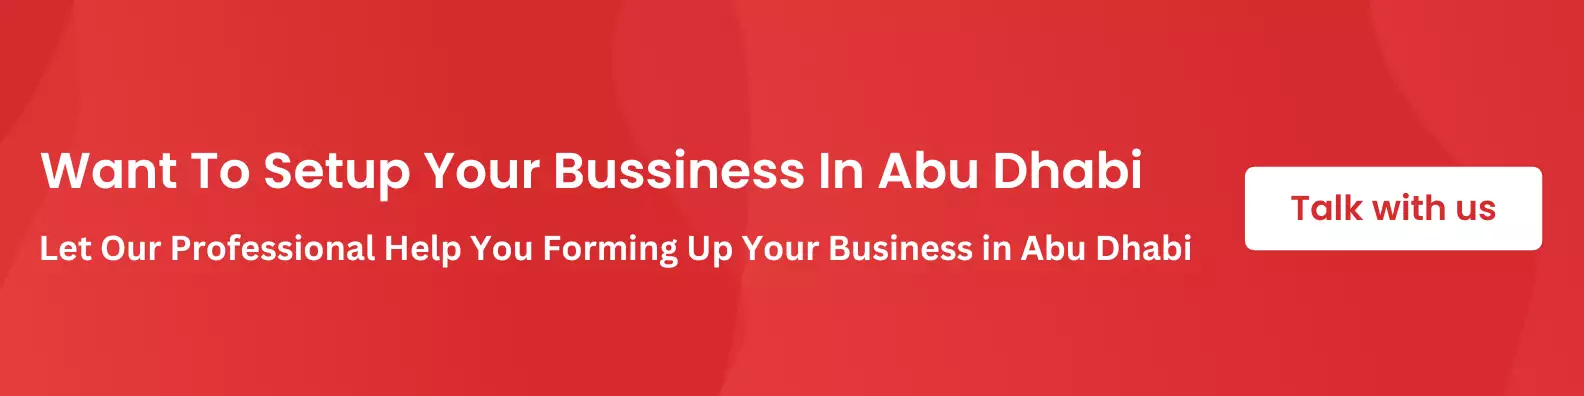 businesss-in-abu-dhabi-3